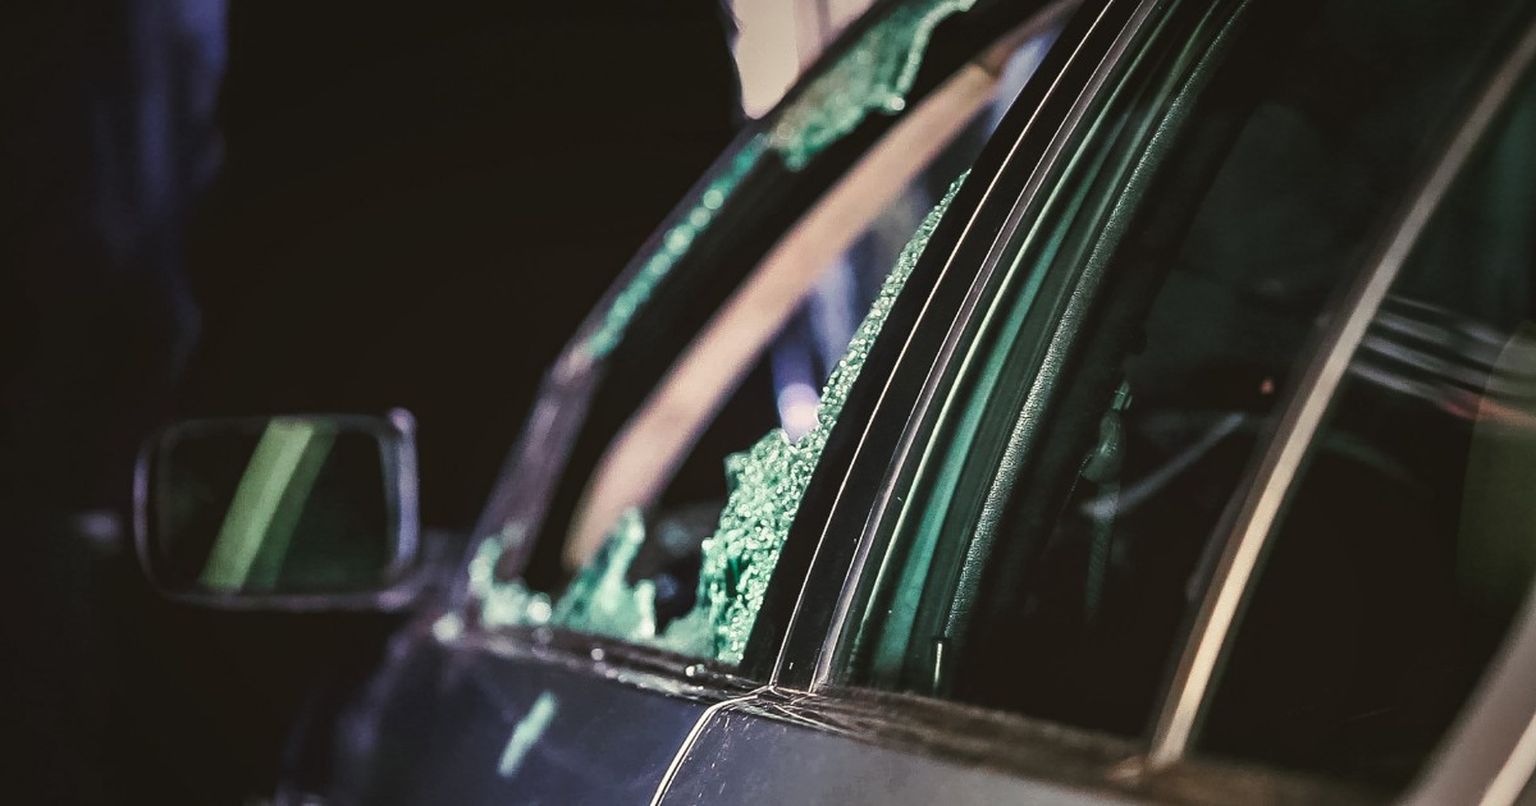 43-летний мужчин разбивал стекла машин в Нымме.